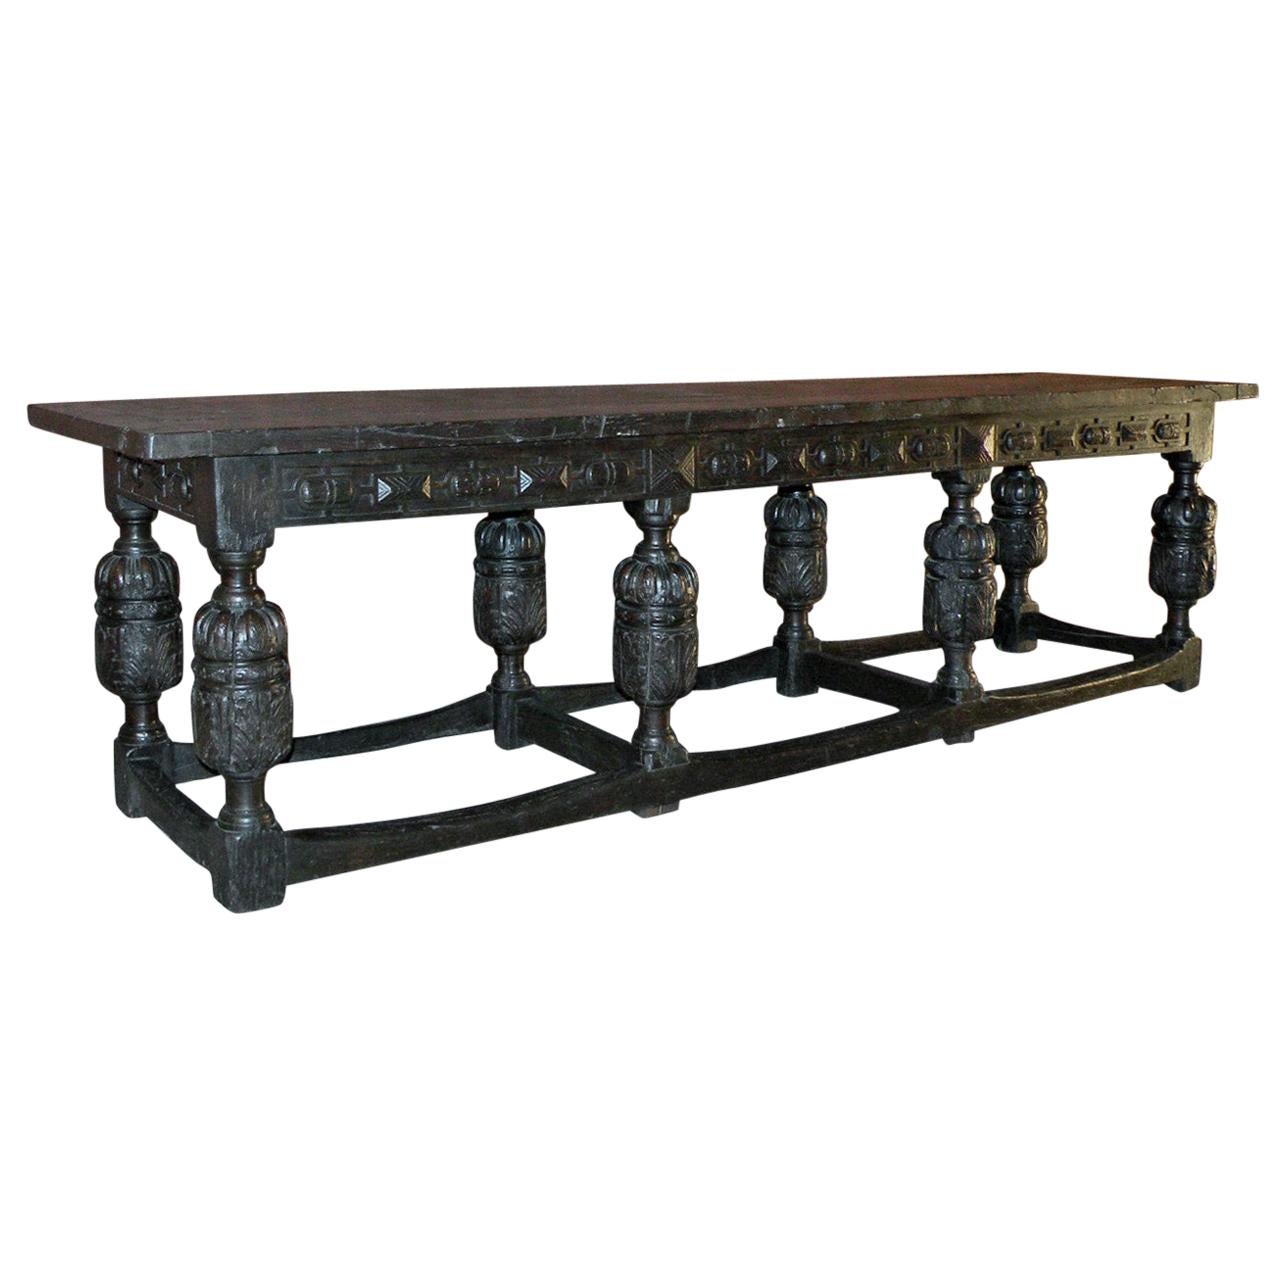 Tudor Console Tables